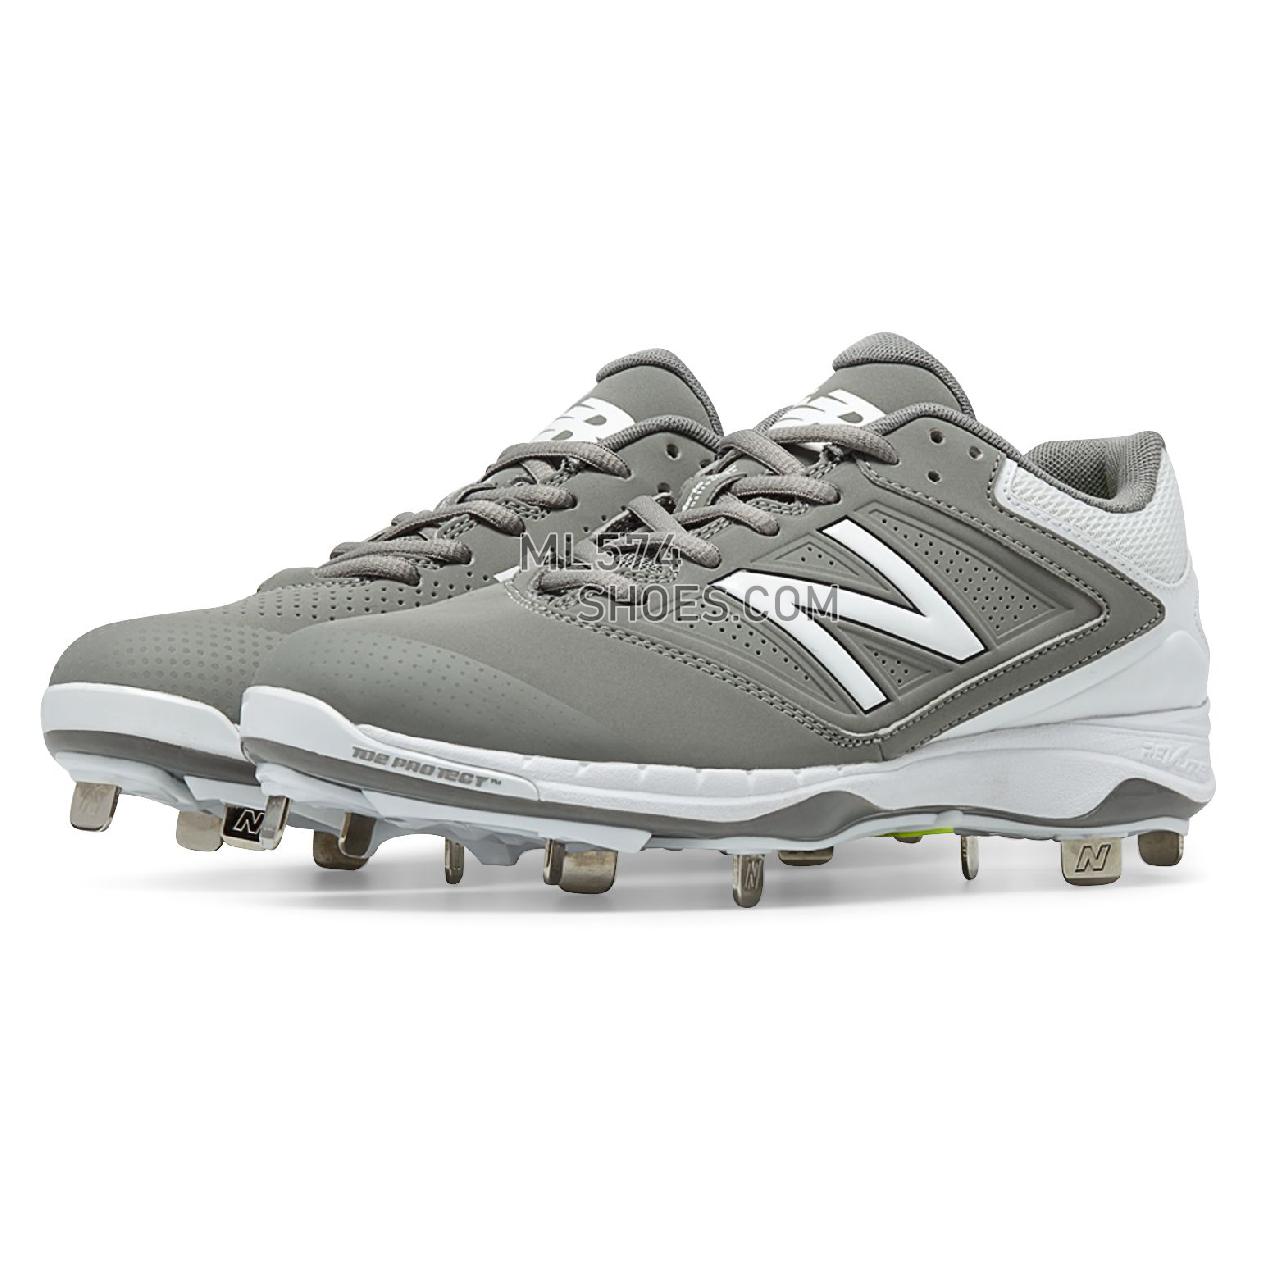 New Balance Metal 4040v1 - Women's 4040 - Baseball Grey with White - SM4040G1